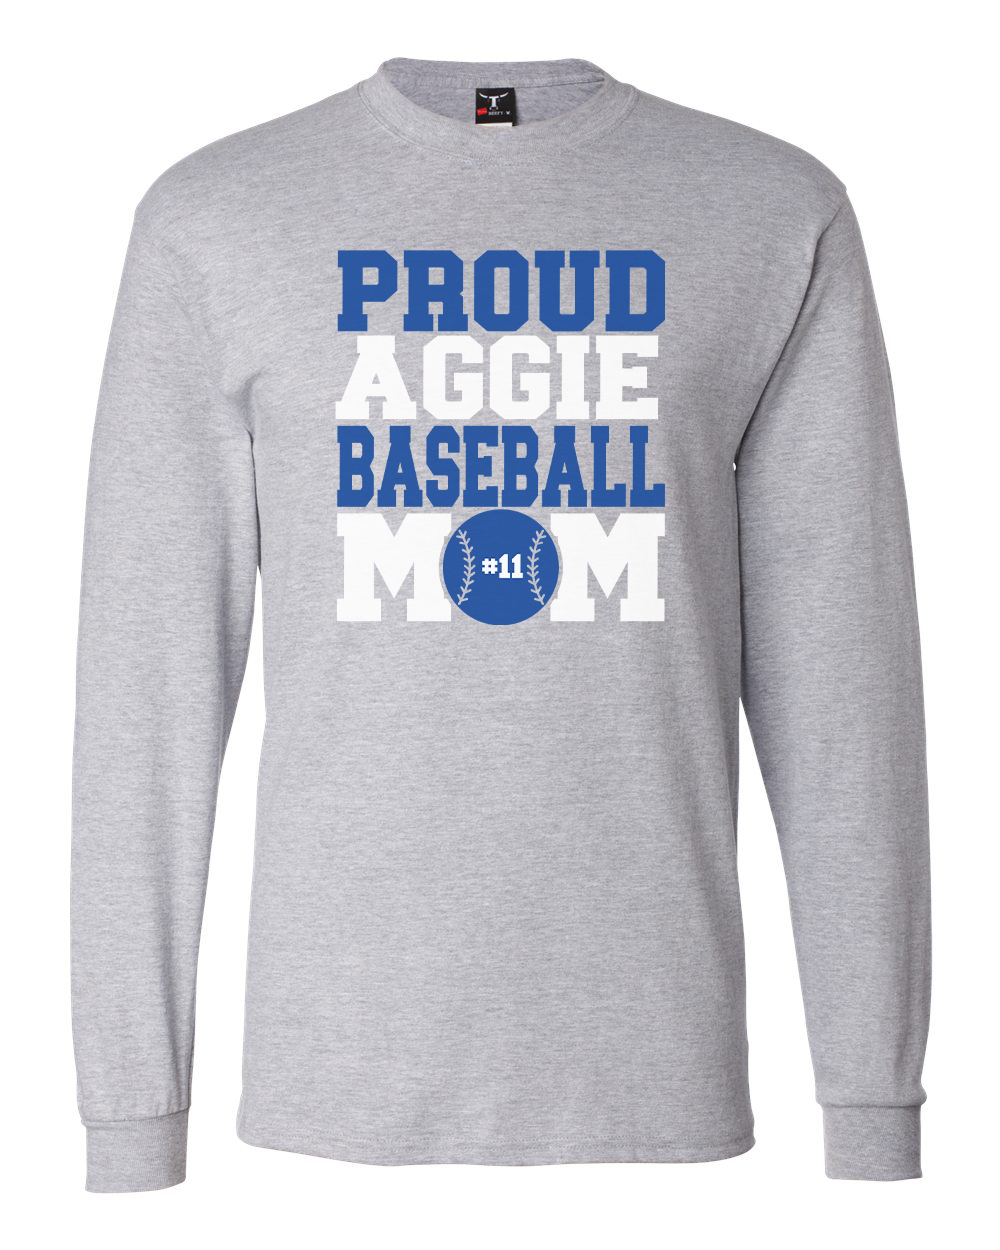 Proud Aggie Baseball Mom